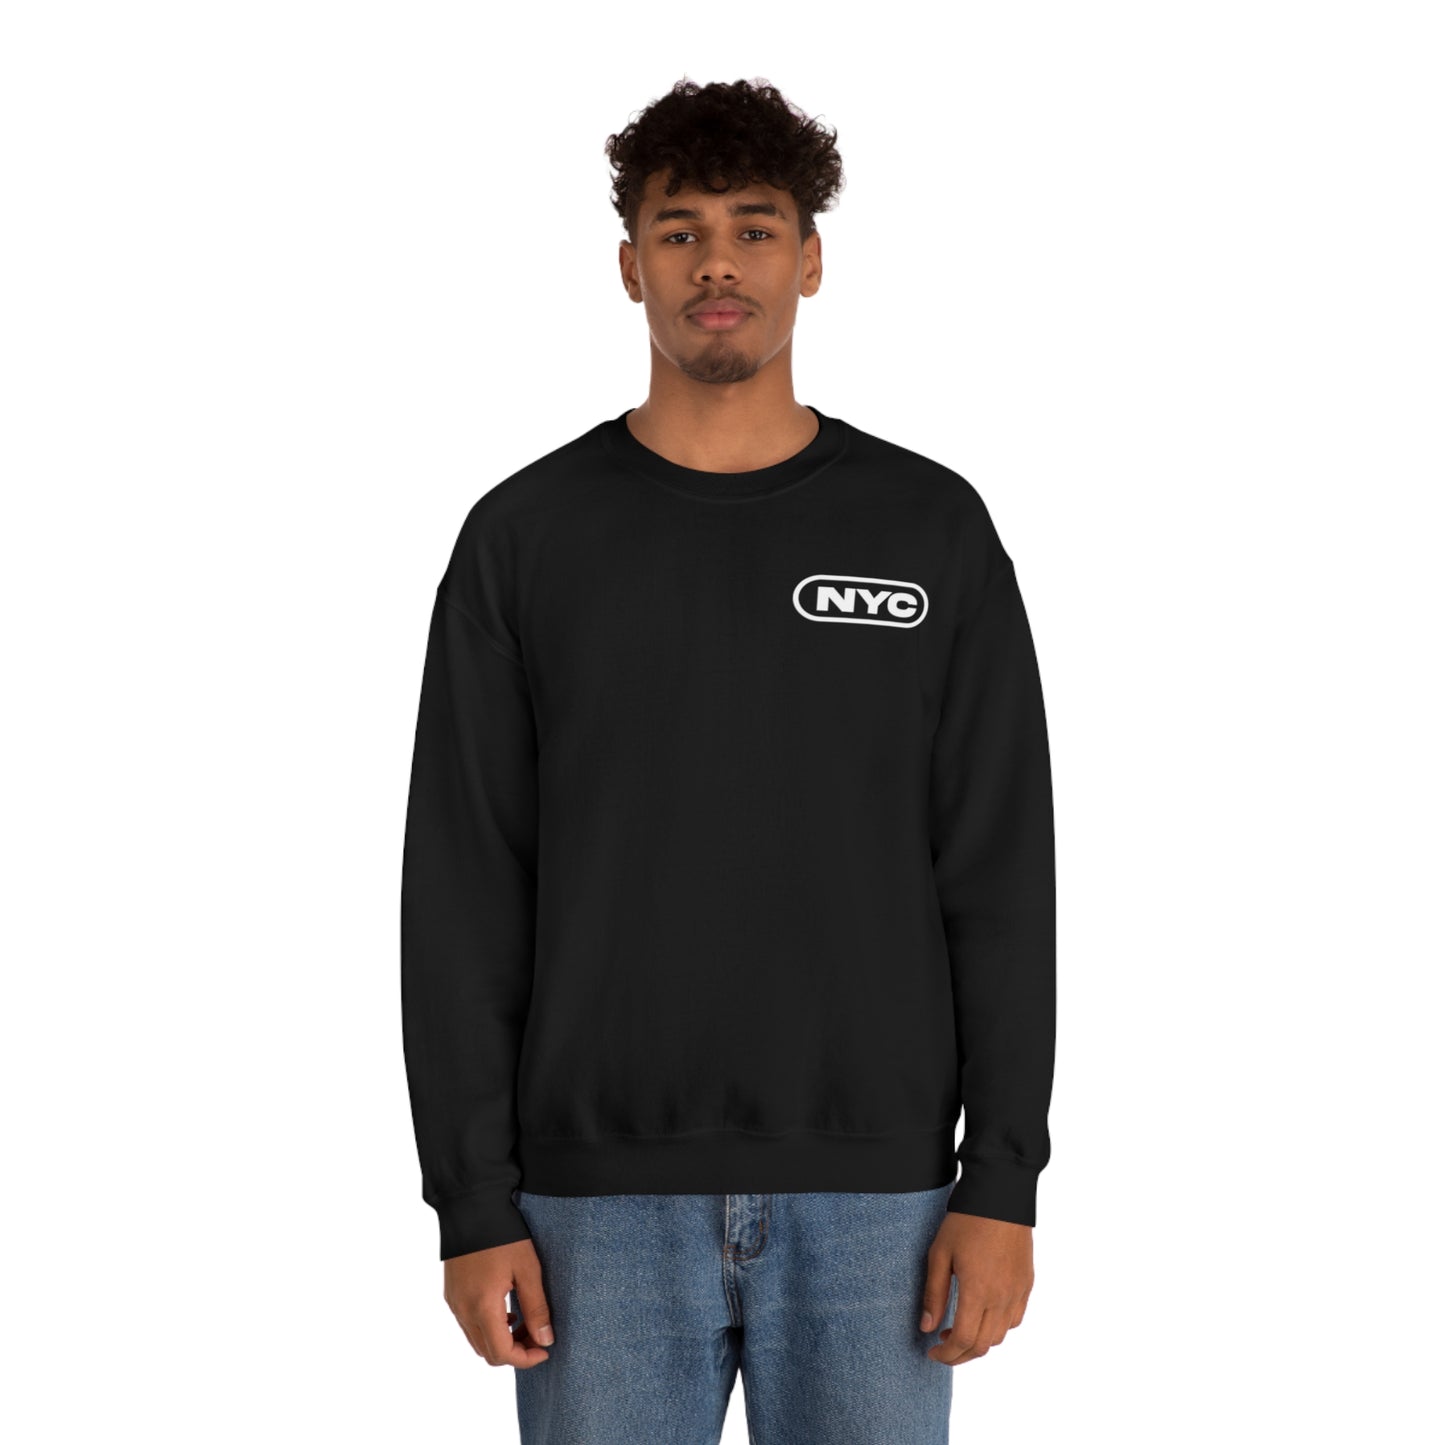 NYC (New York City) Crewneck Sweatshirt